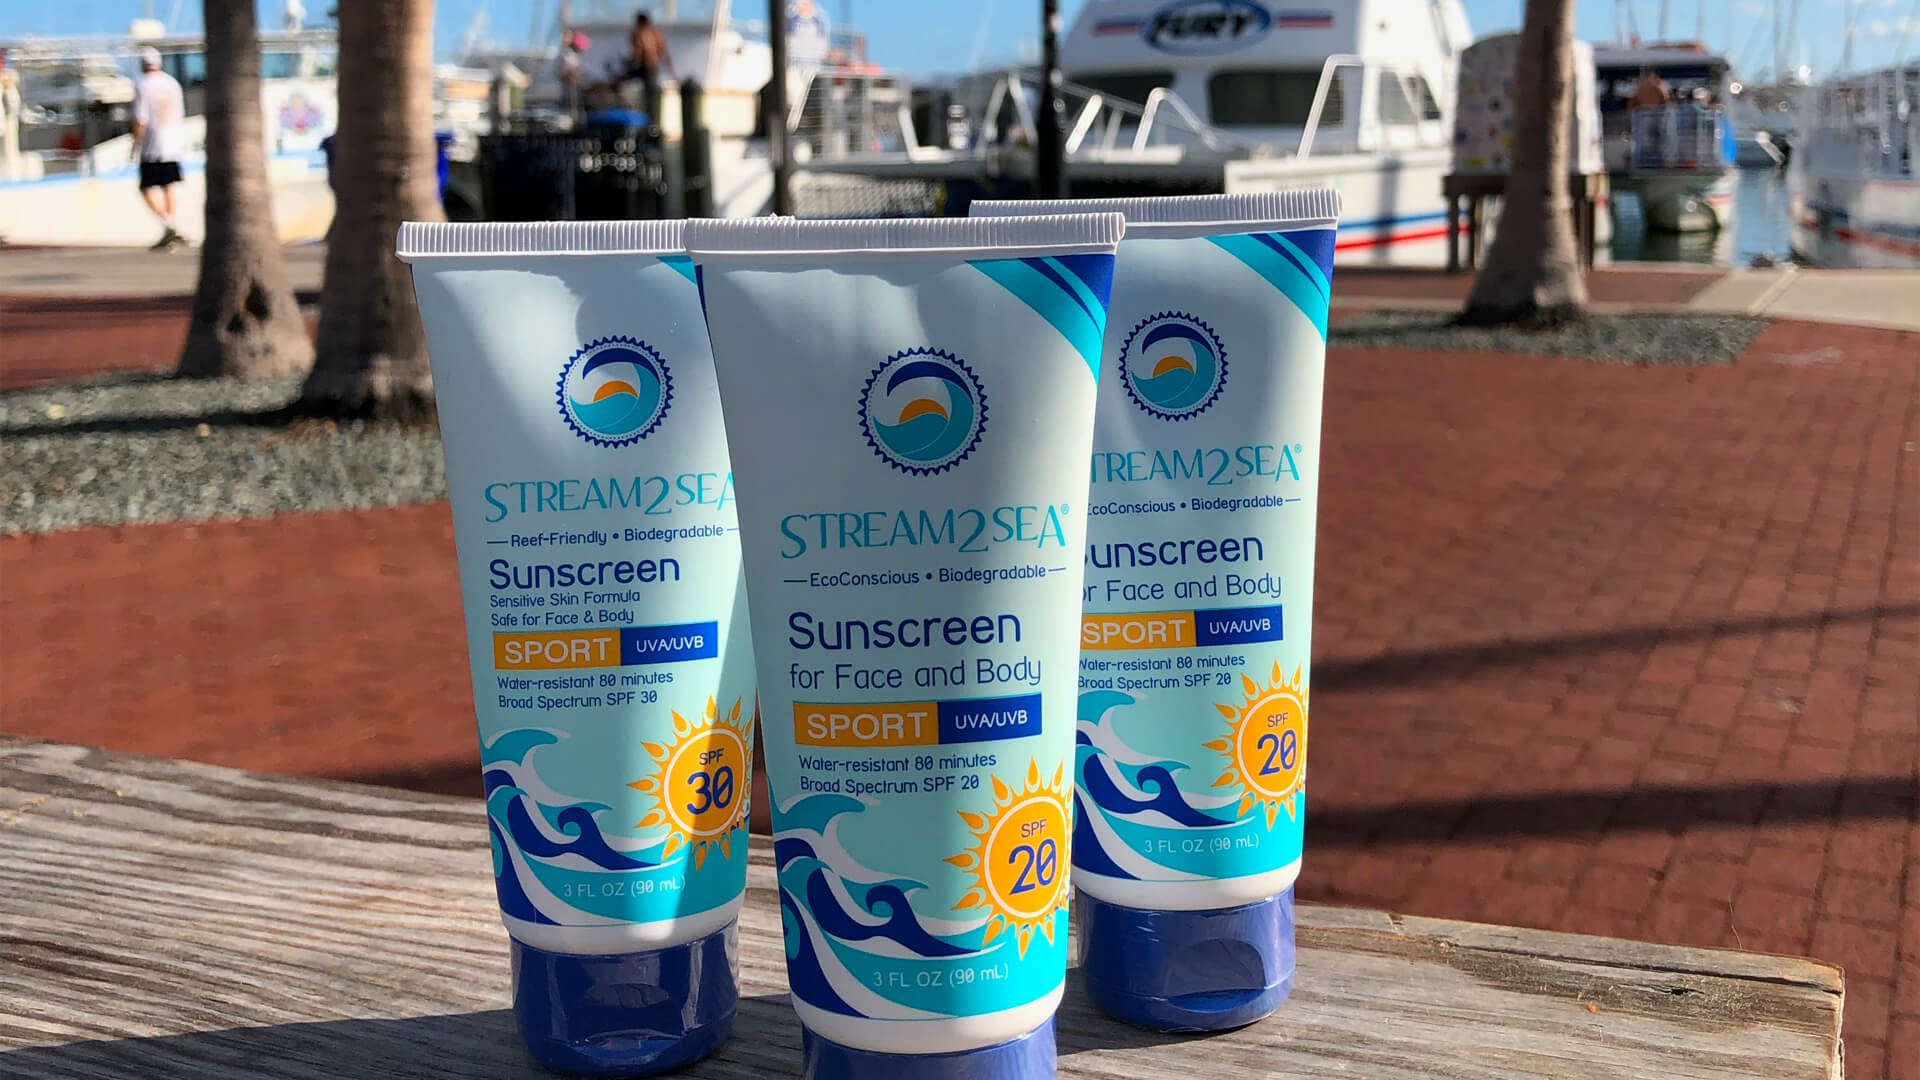 Stream2sea sunscreen